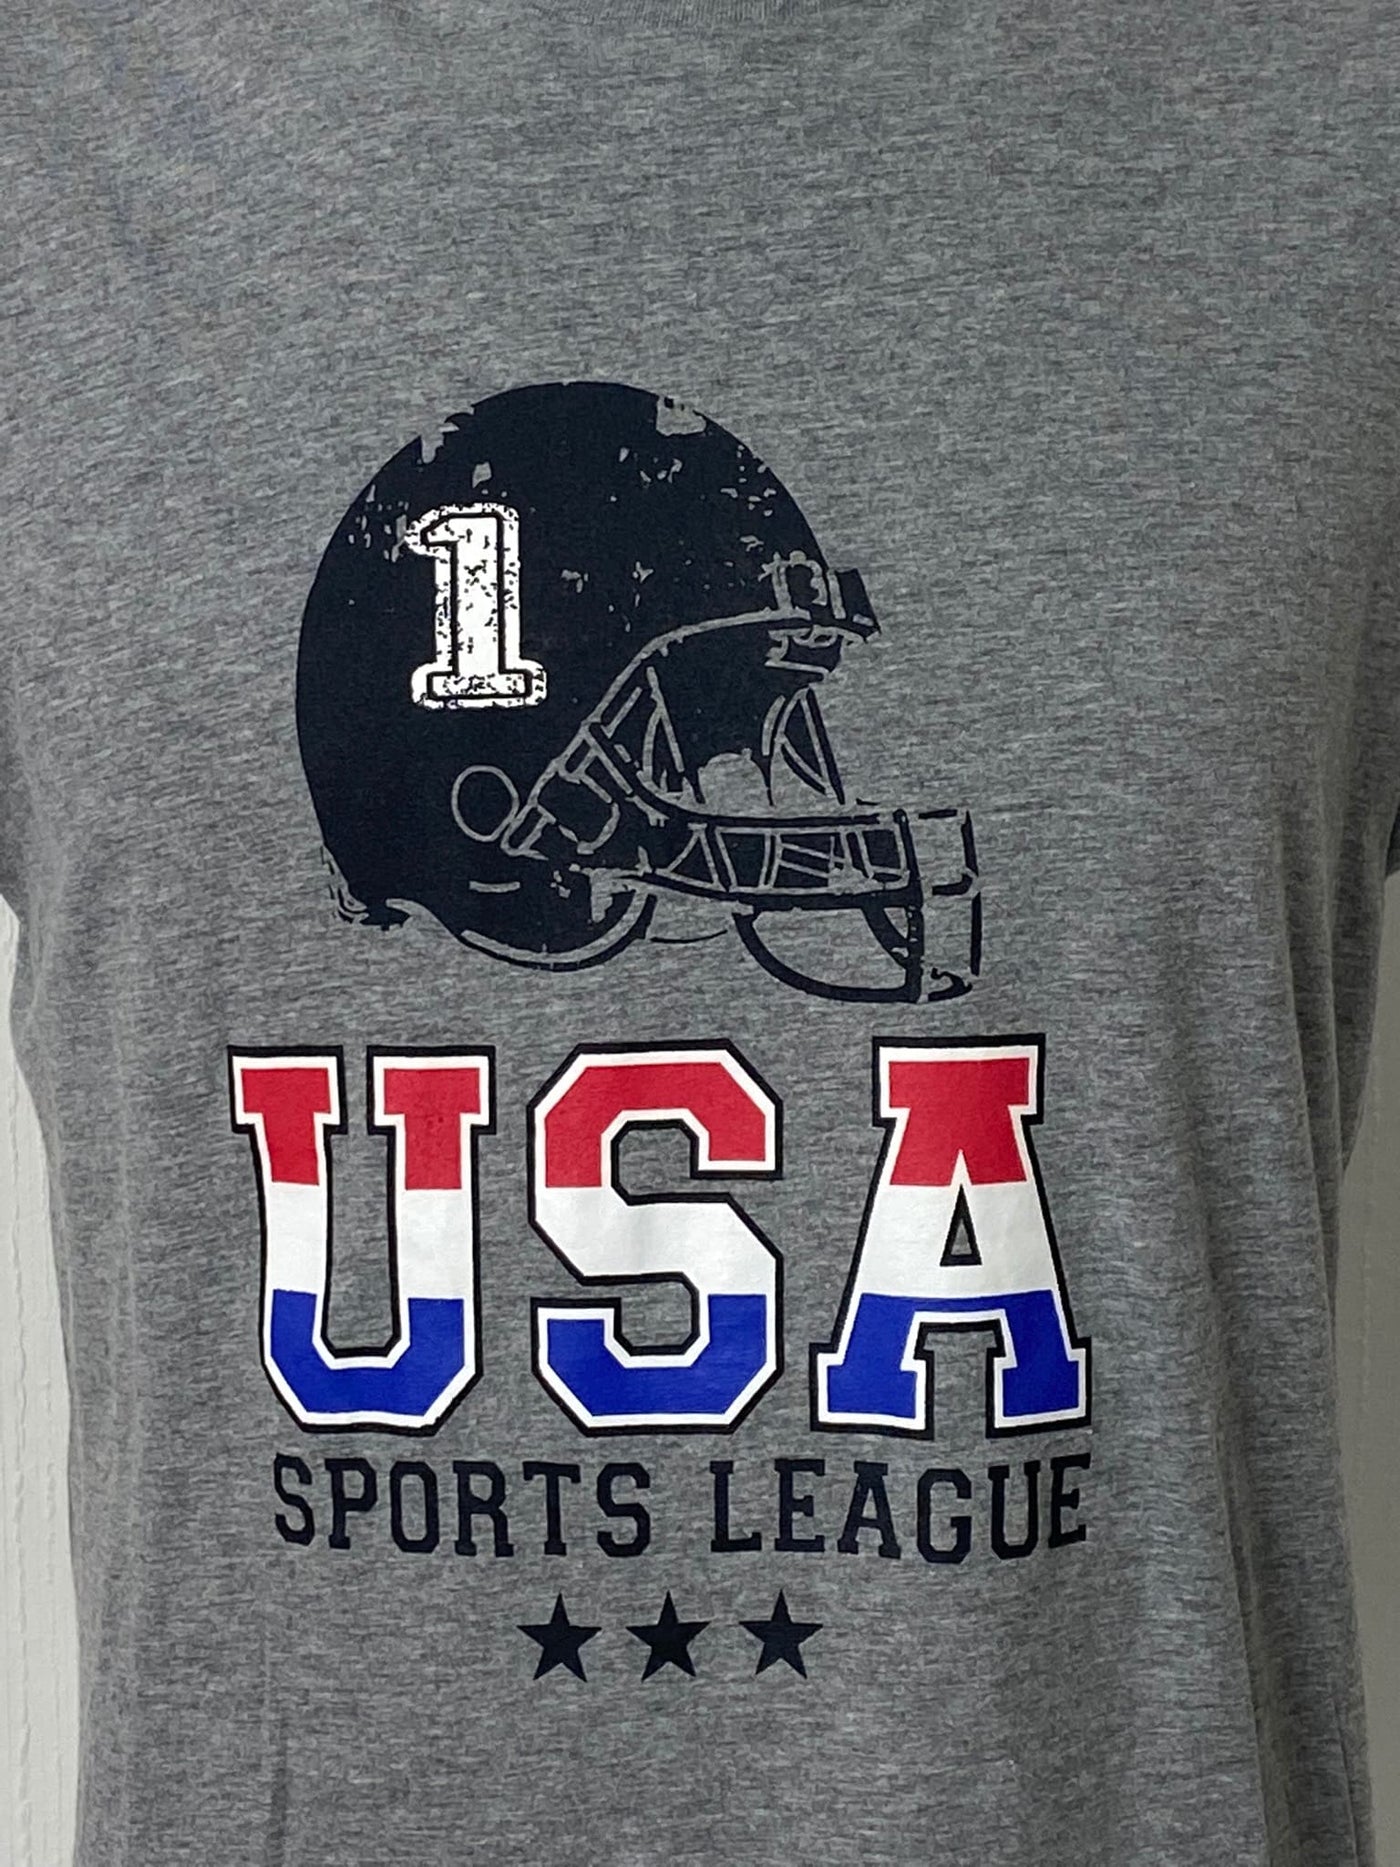 Super Bowl NFL Football  Shirt "American Sports" Gr. M